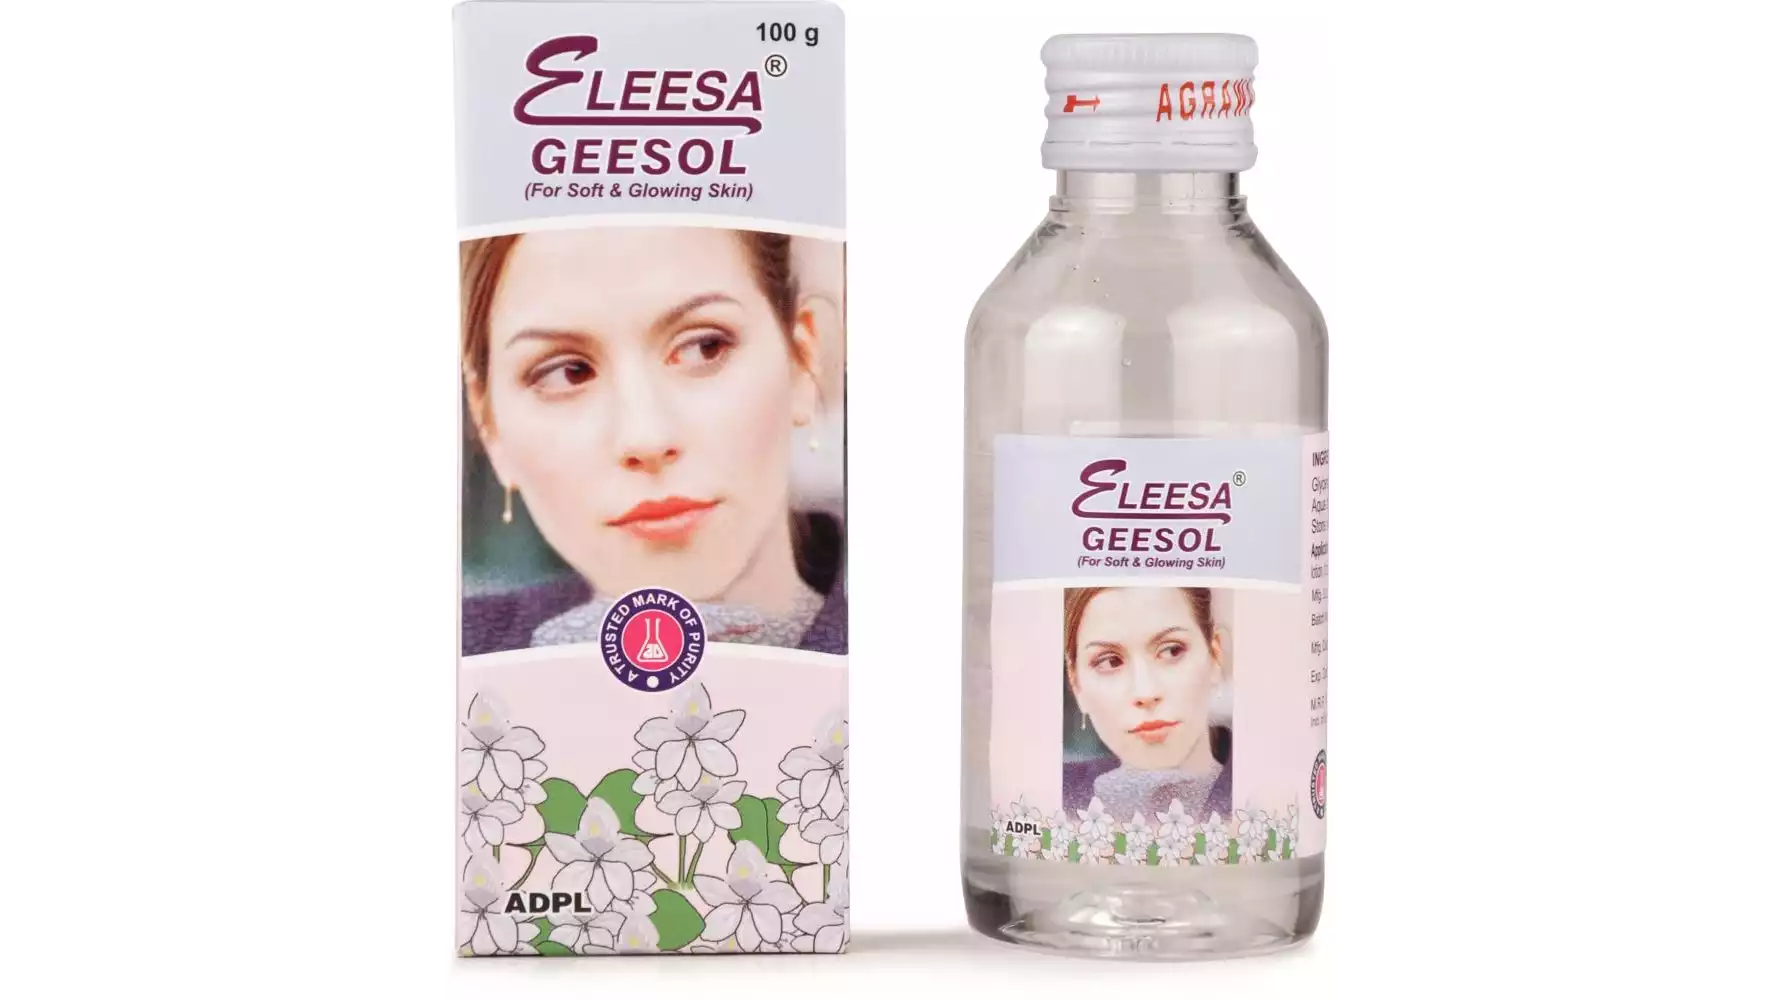 ADPL Eleesa Geesol Glycerin (100g)